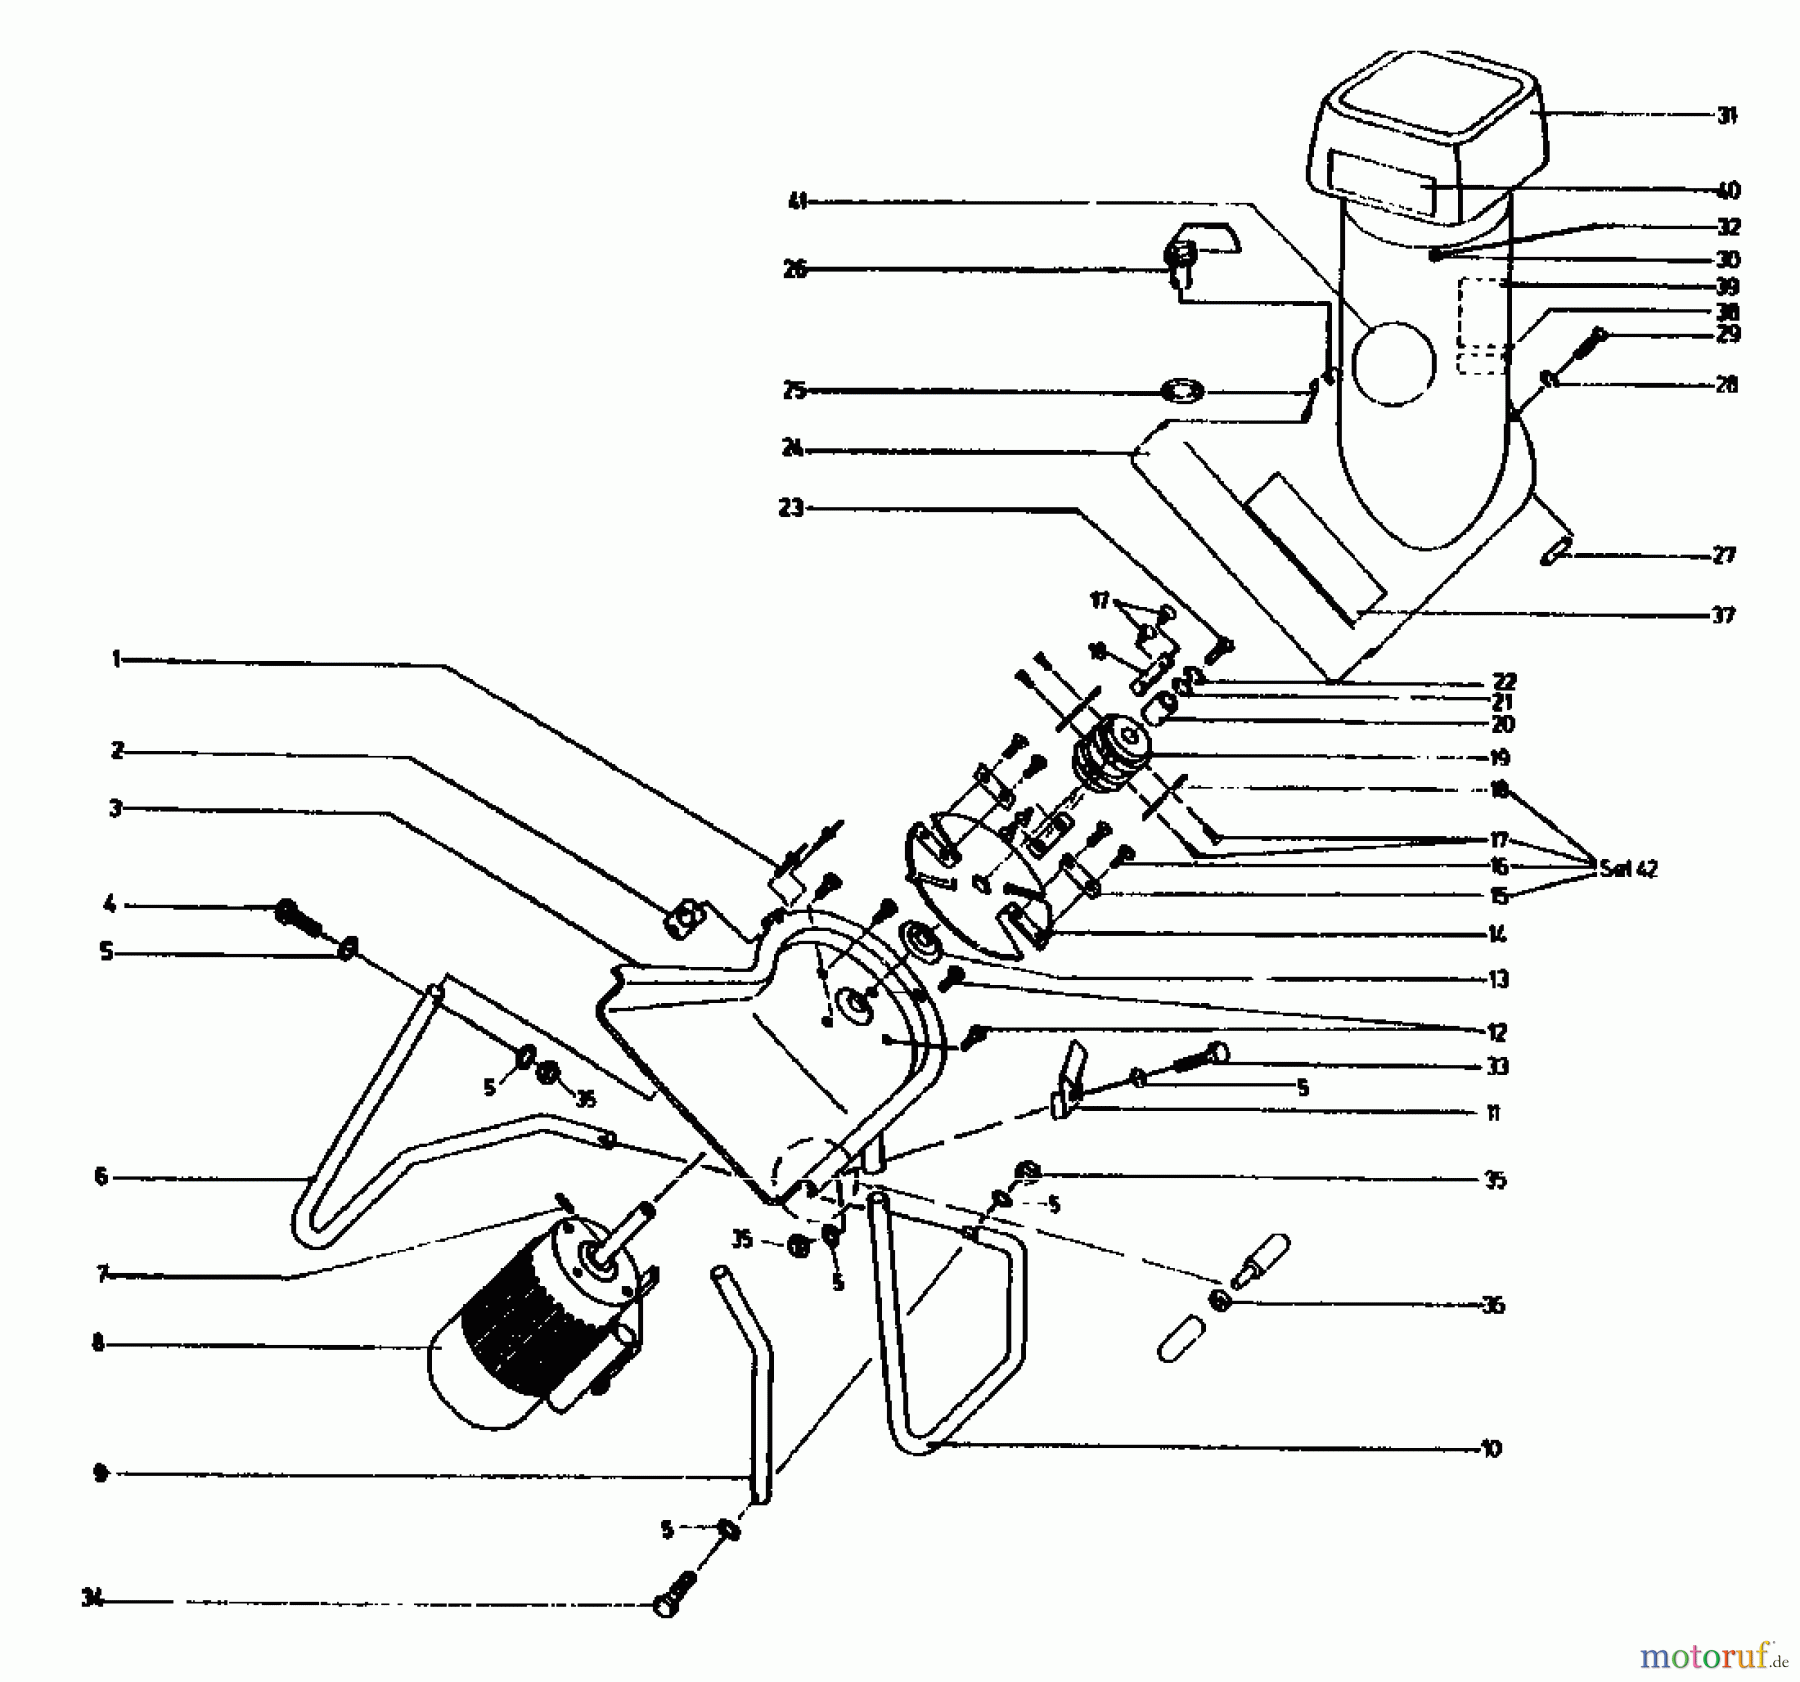  Gutbrod Broyeur GAE 13 04002.03  (1990) Machine de base